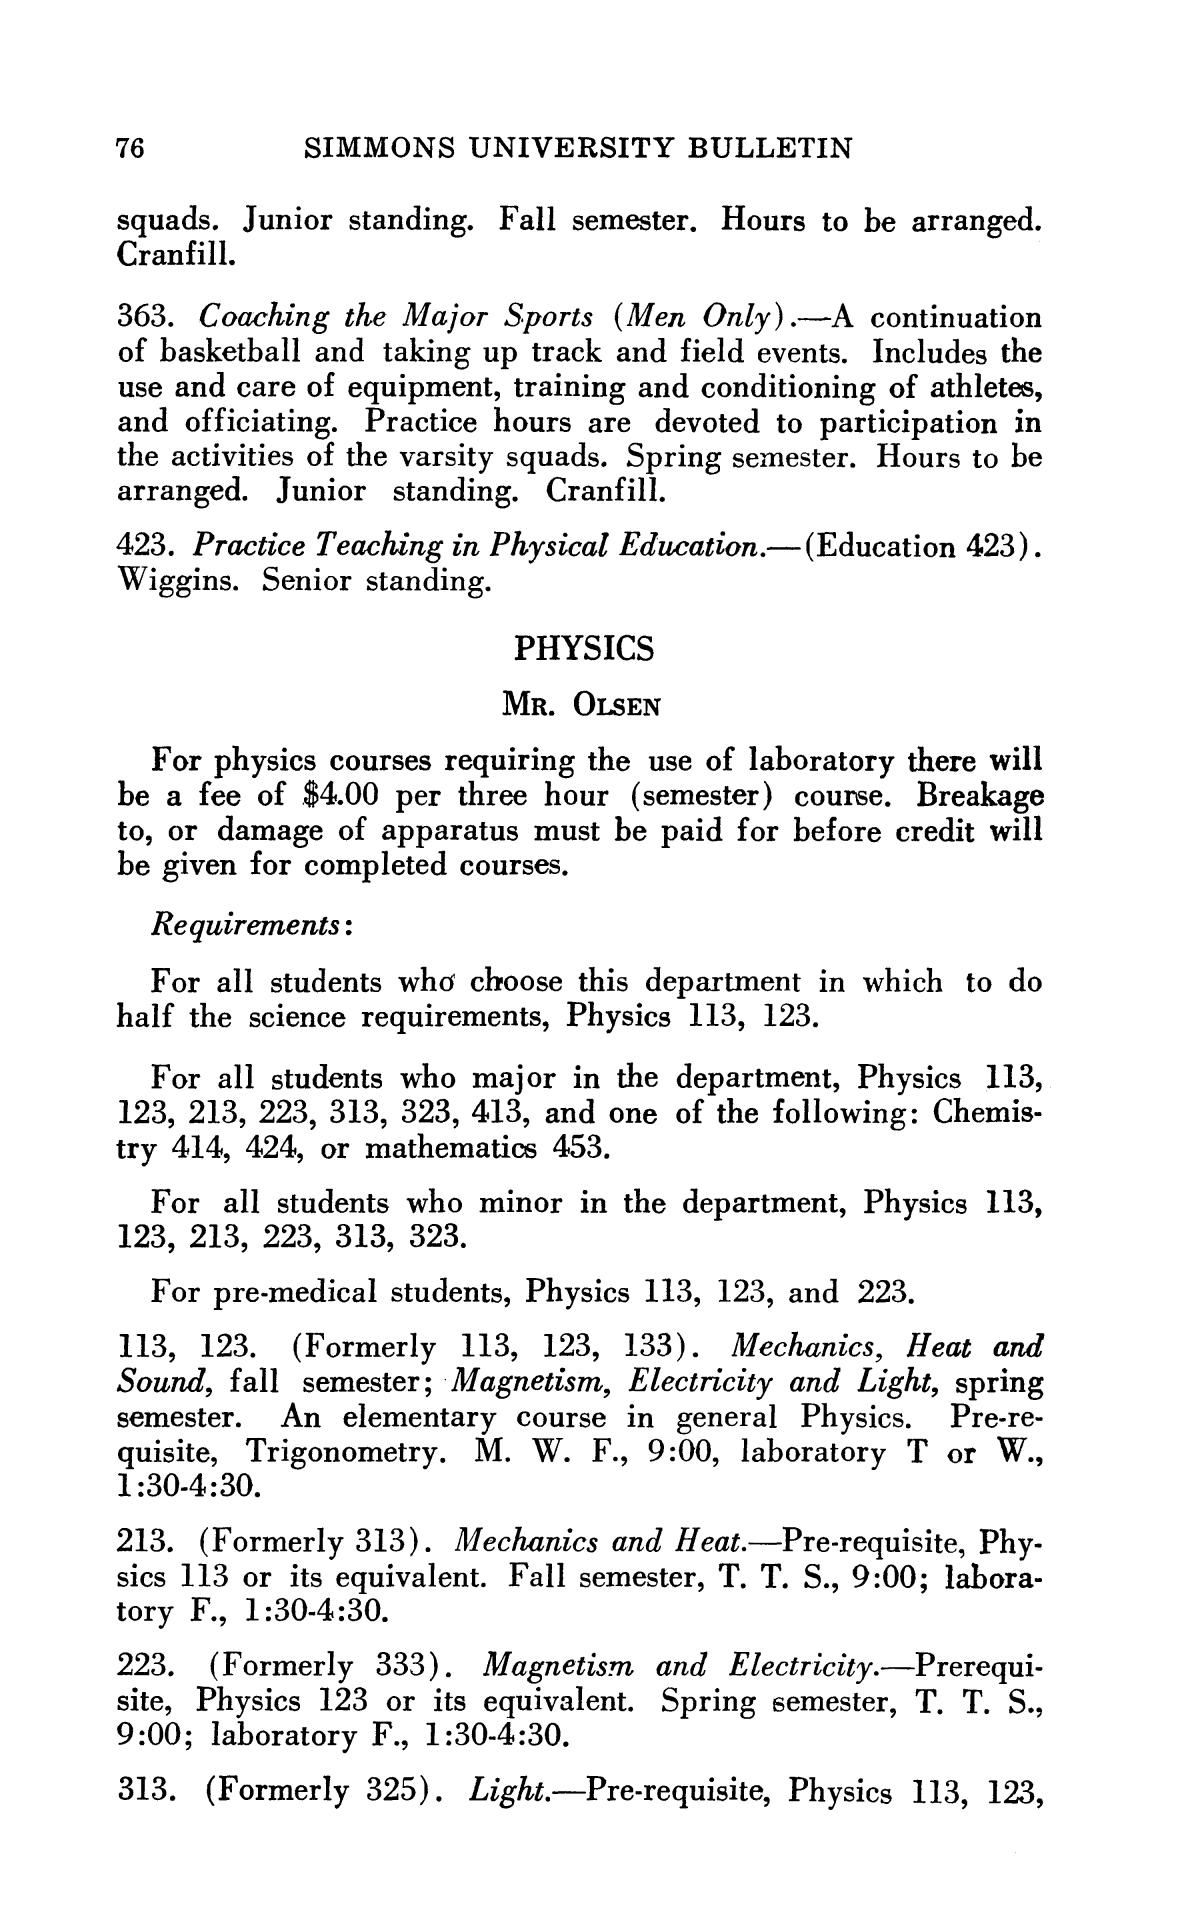 Catalogue of Simmons University, 1933-1934
                                                
                                                    76
                                                